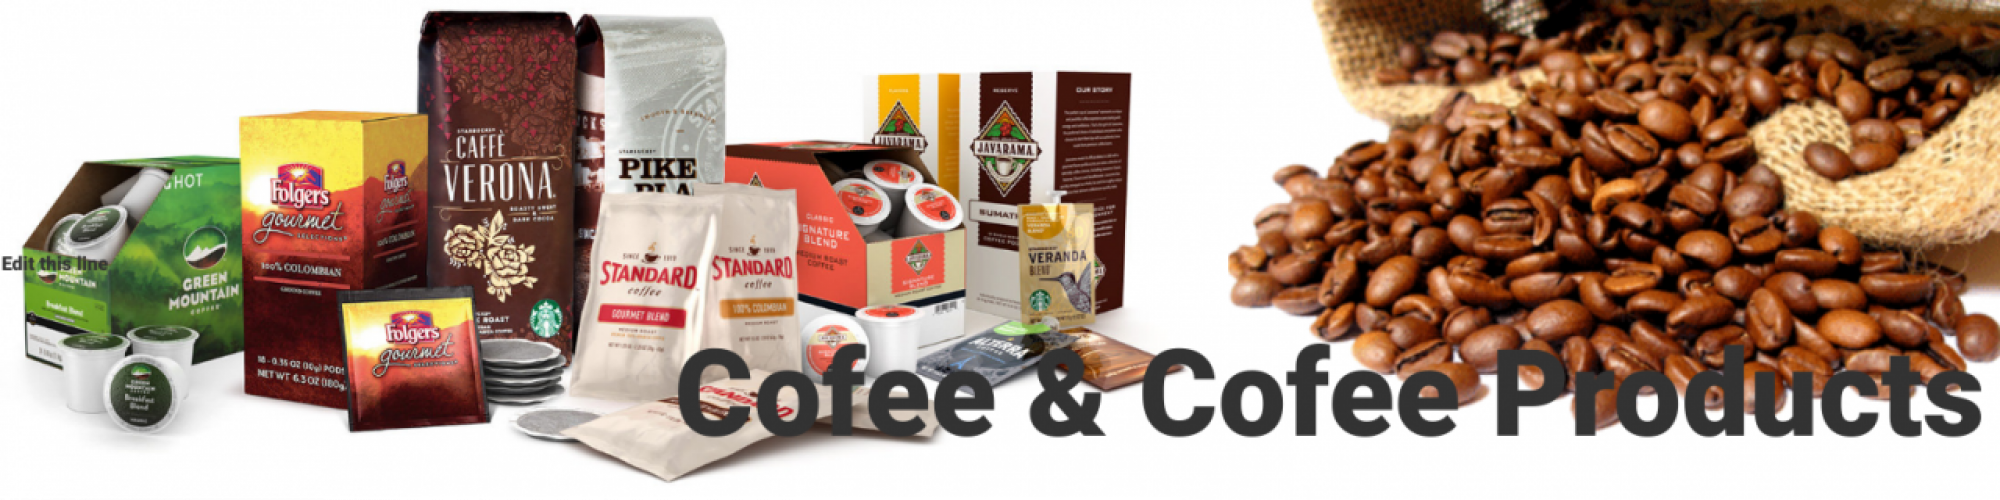 Coffee & Coffee products